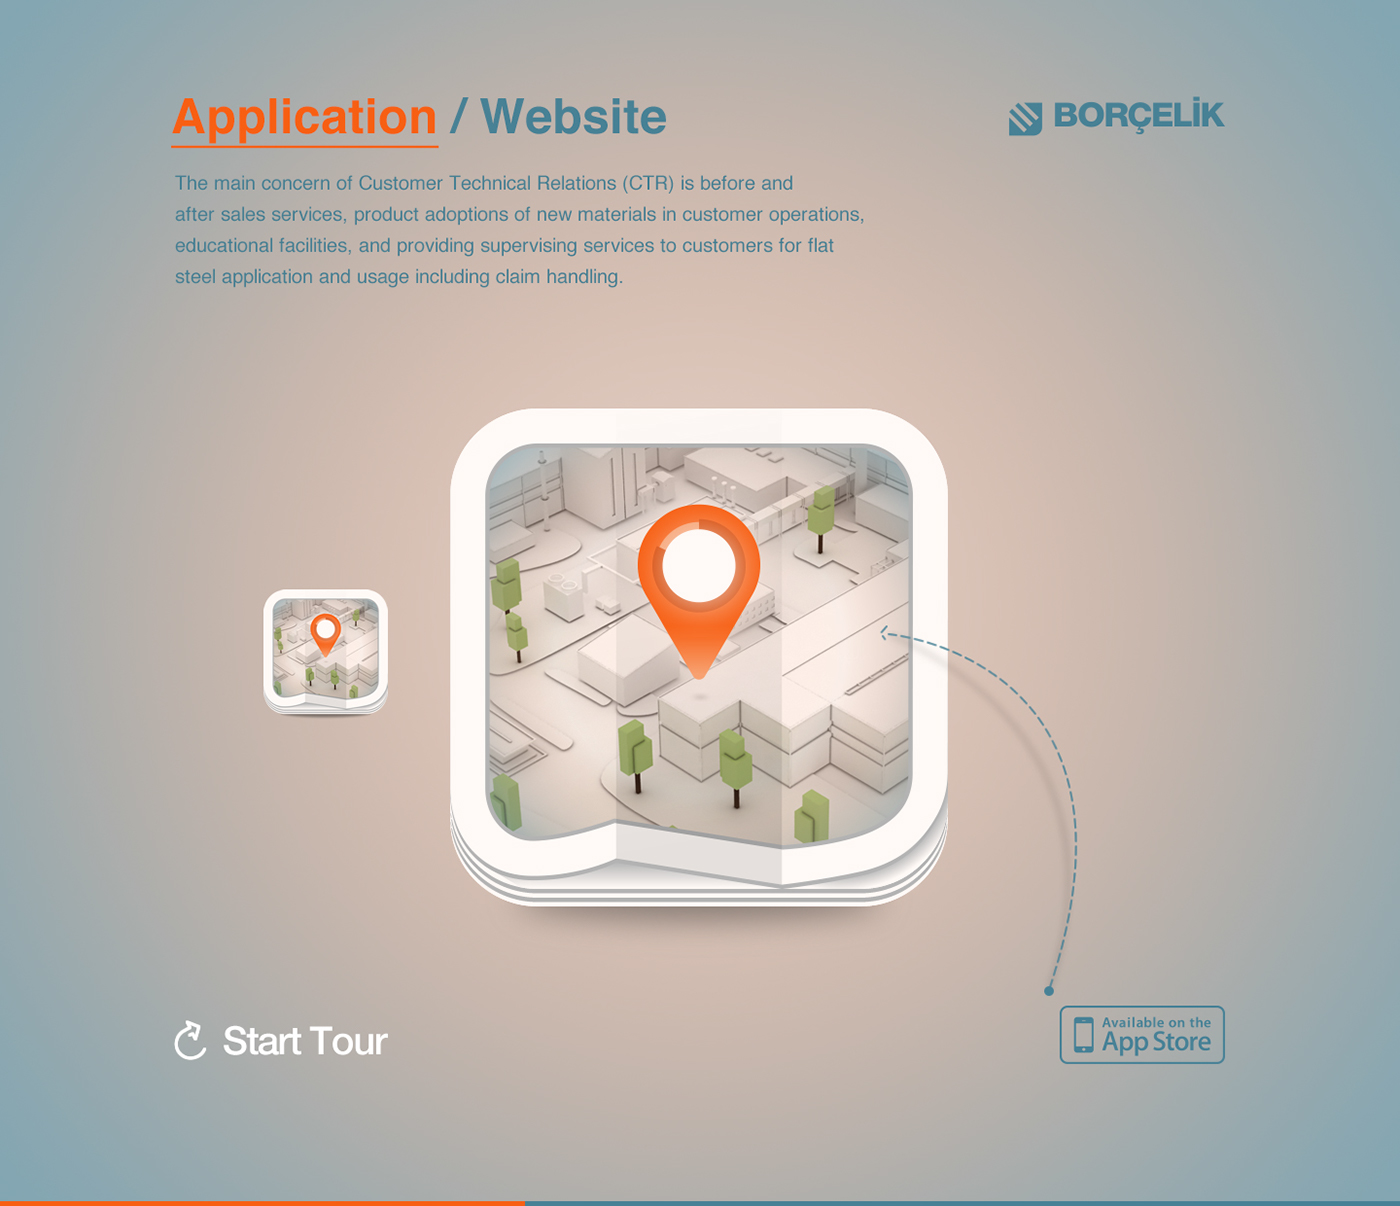 Borusan borçelik holding company corporate Web Website Interface UI ux mobile application dreambox Taygun taygunkurtulus